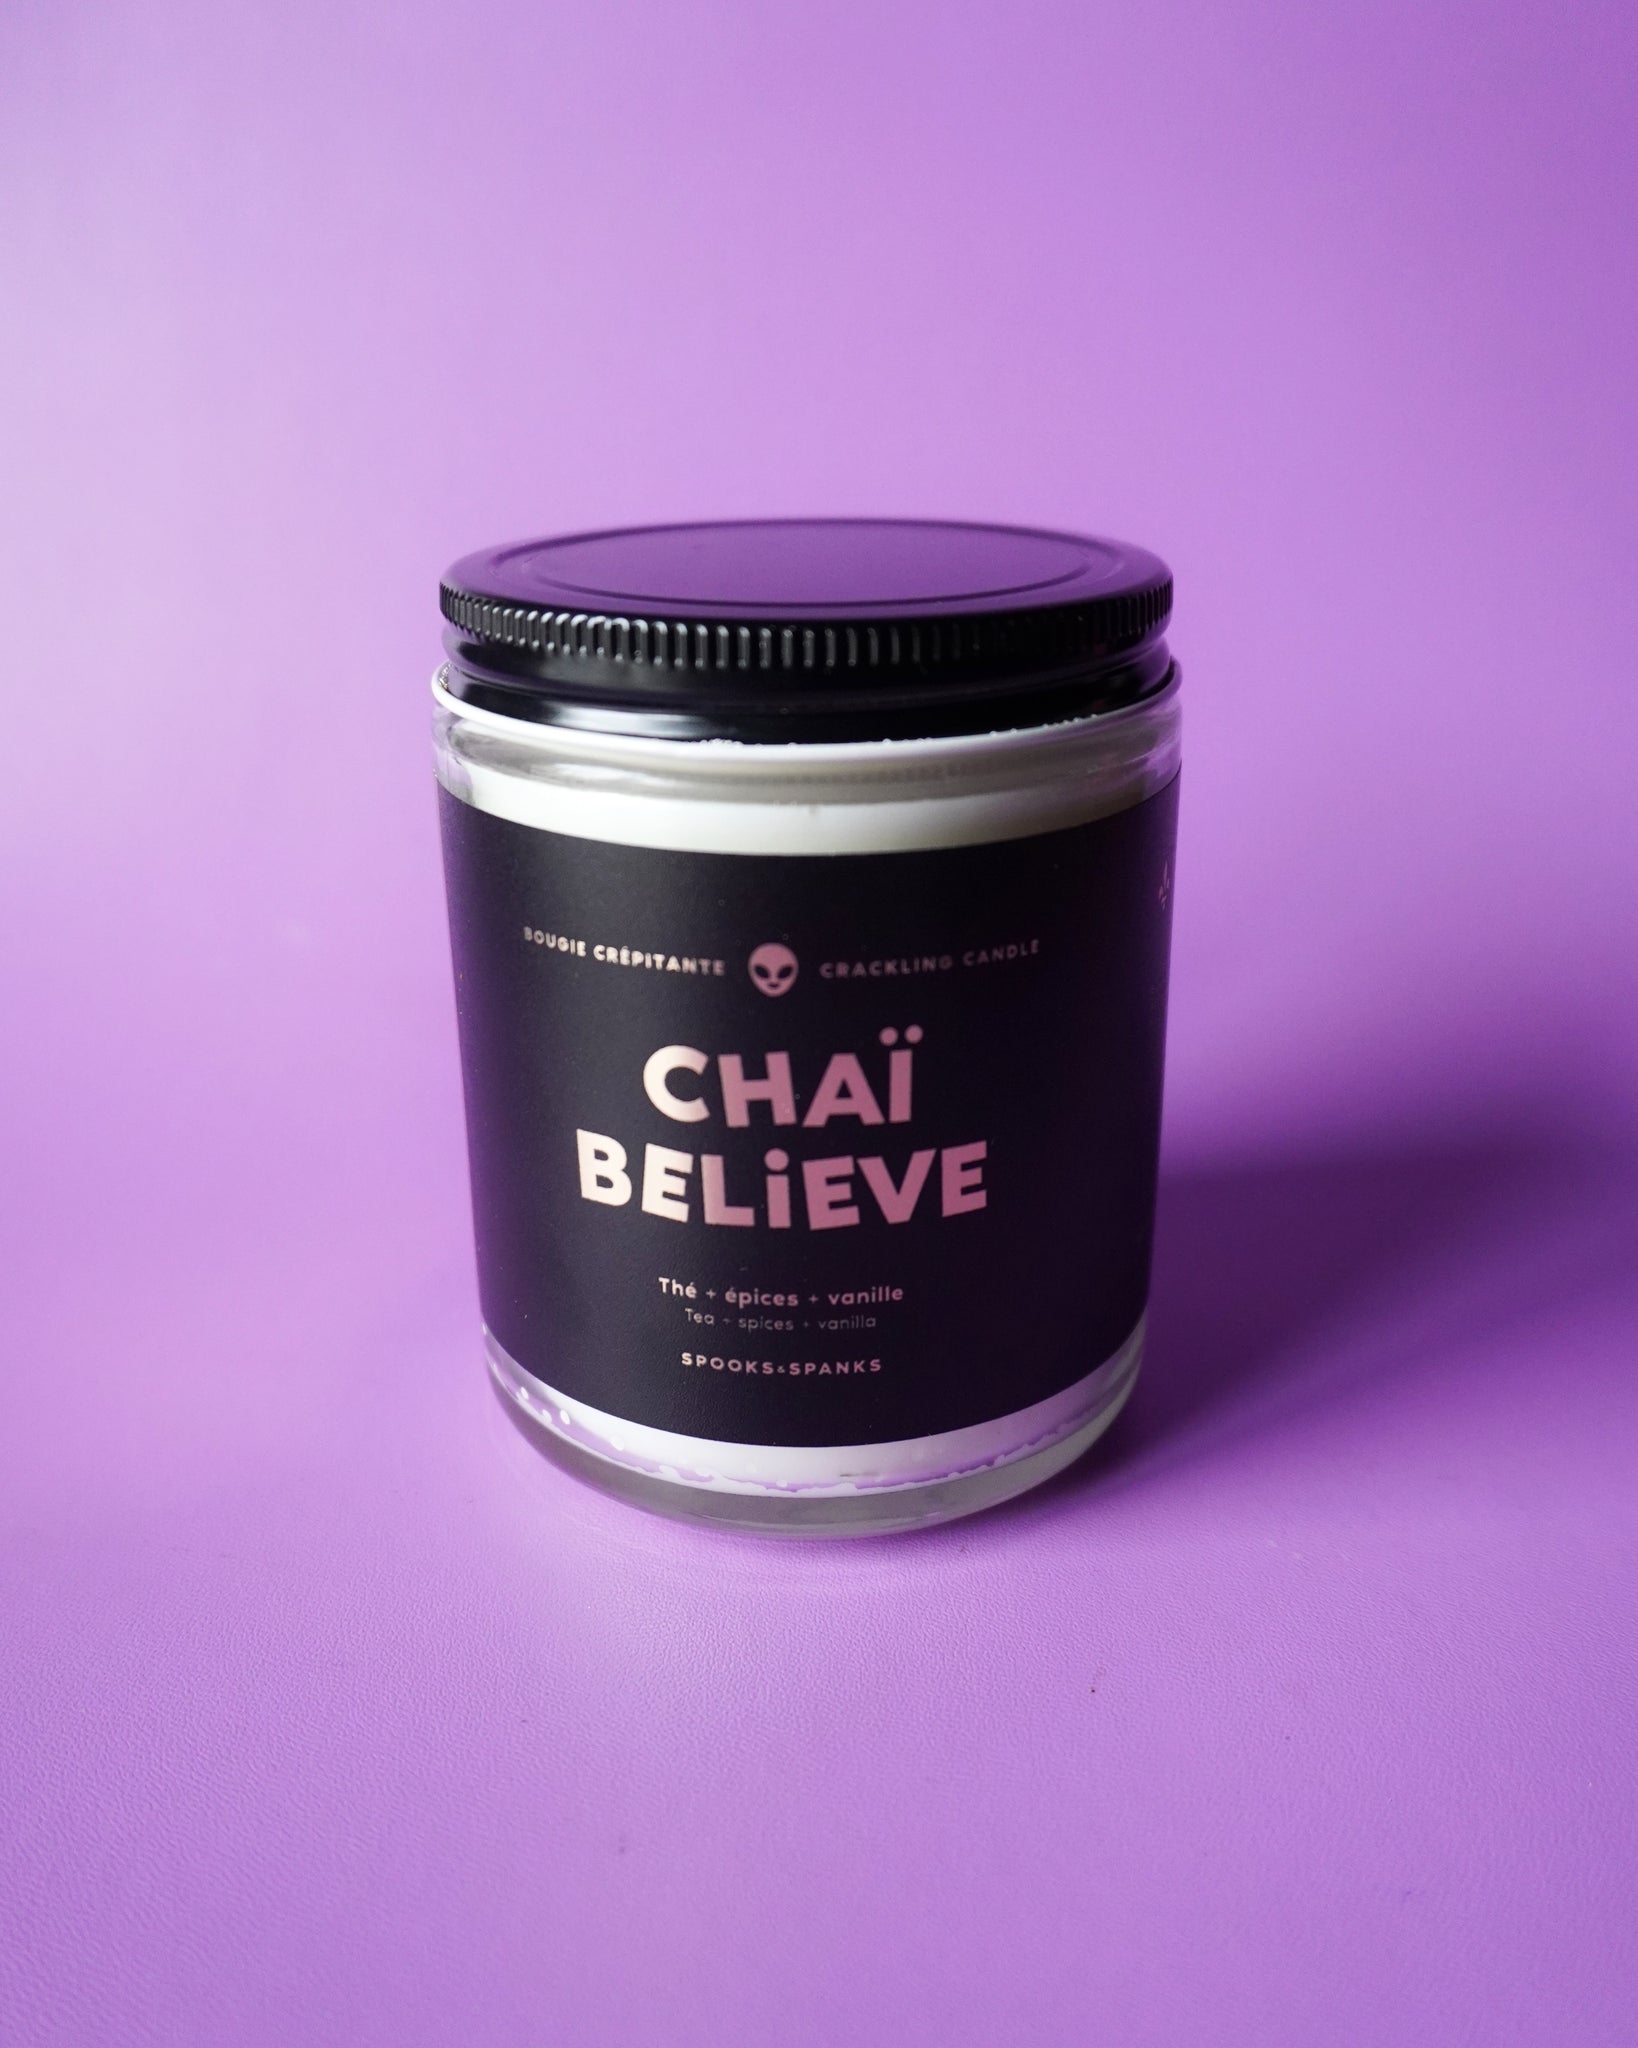 Chaï Believe Crackling wick candle - tea + spices + vanilla